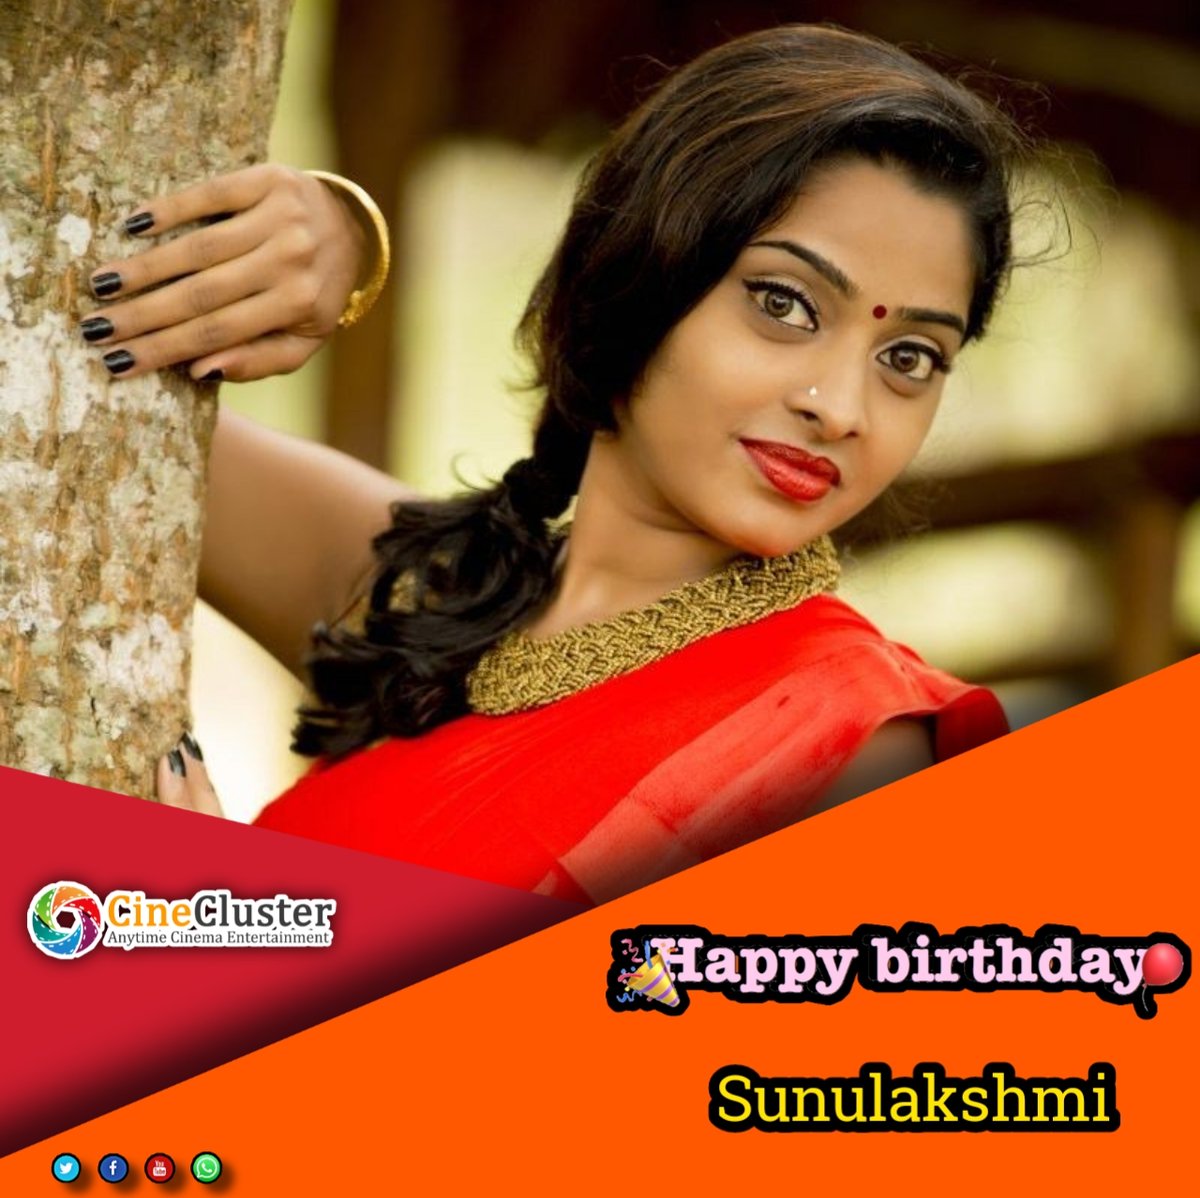 Team #CineCluster Wishing you a very Happy Birthday!!! Have a great & healthy year ahead!! #Sunulakshmi 😊😊🎂🎂 #HBDSunulakshmi #CineCluster